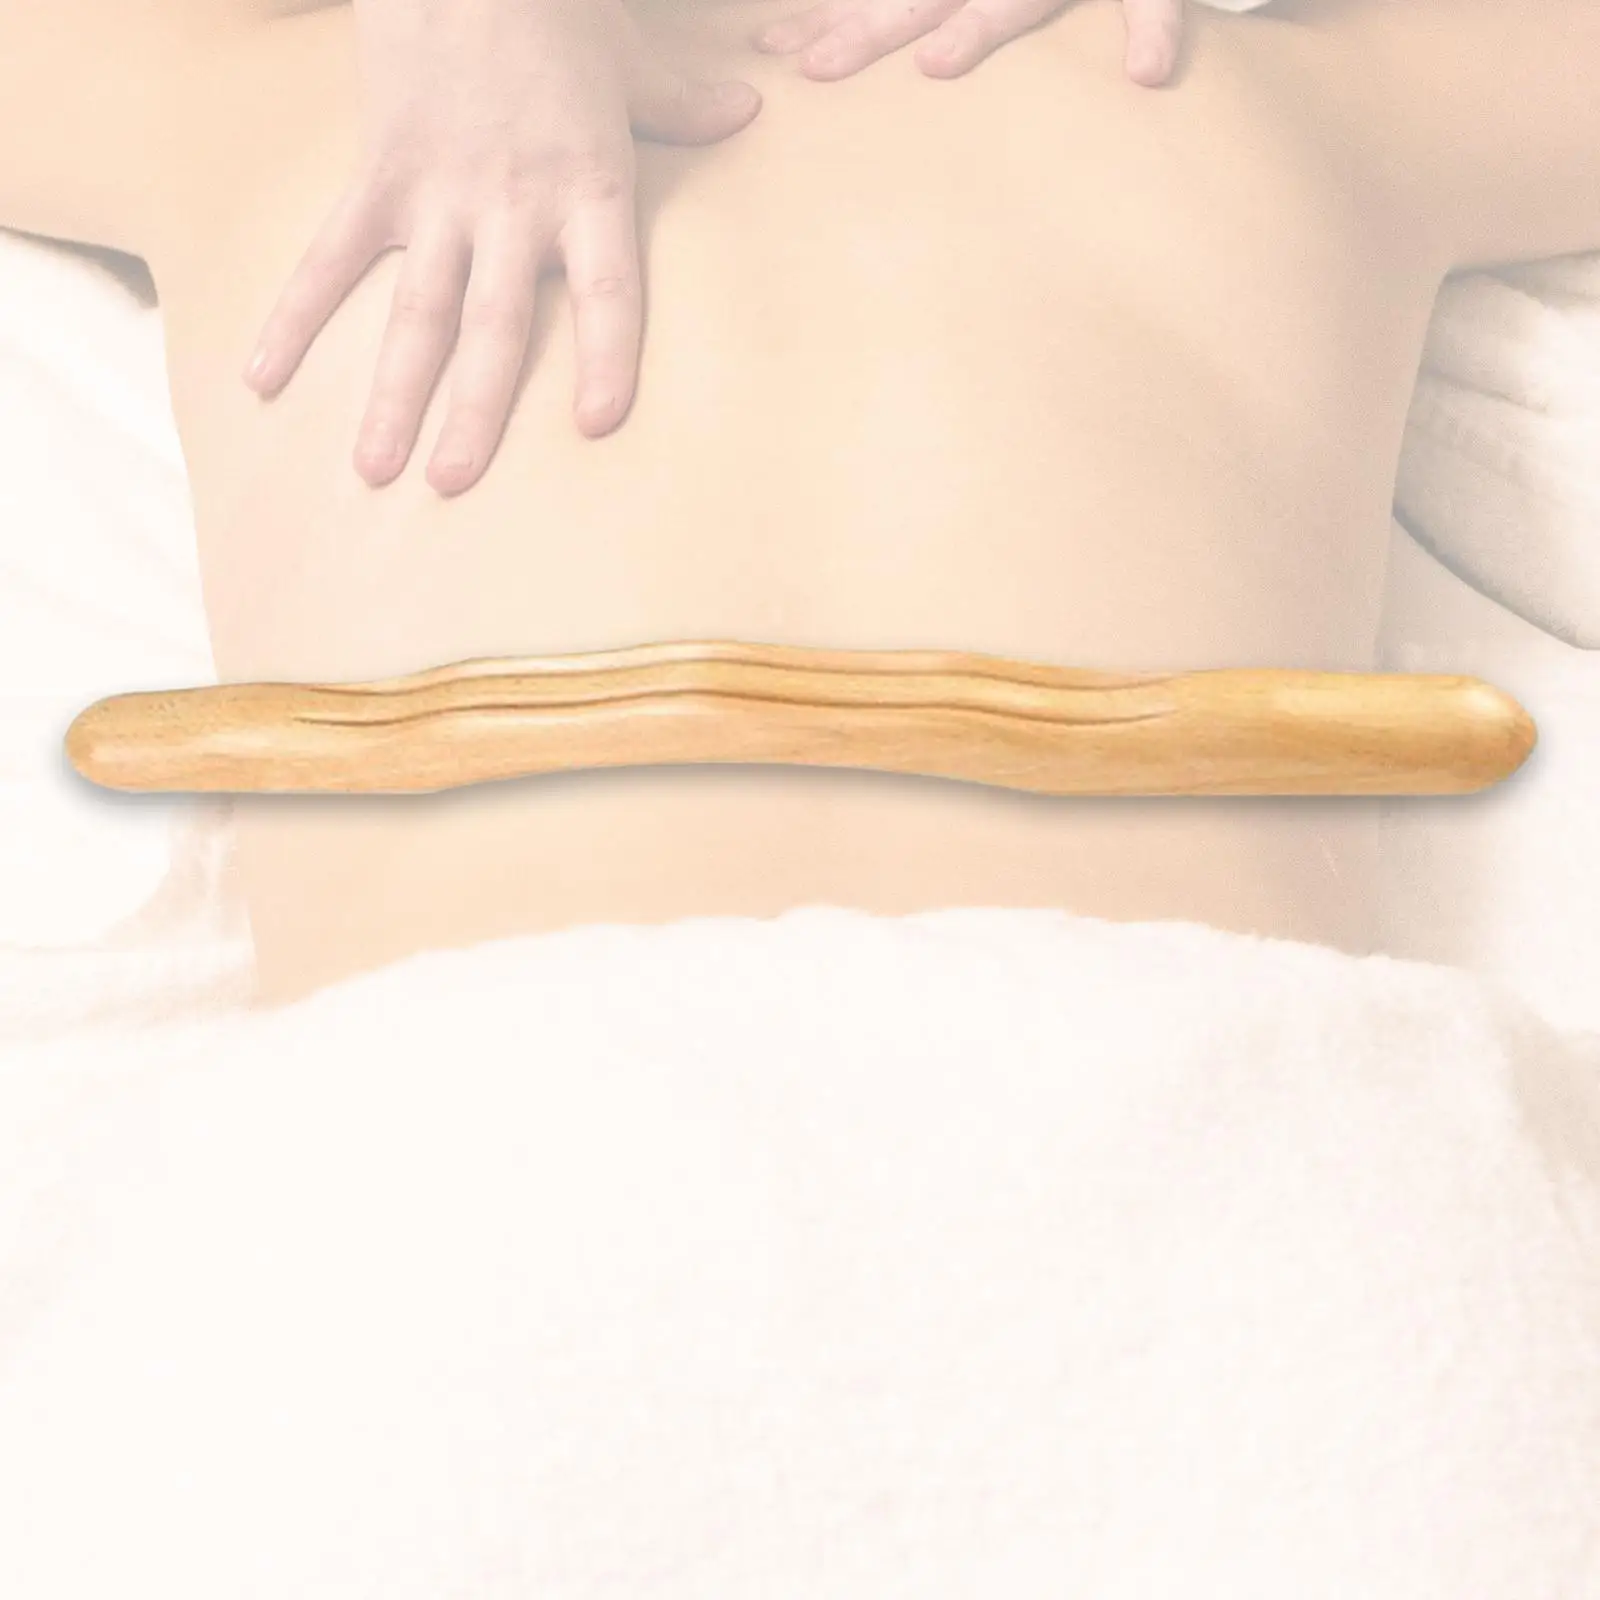 Handheld Wooden Massager Stick Guasha Scraping Stick for Full Body Leg Neck Manual Wooden Massager Stick 